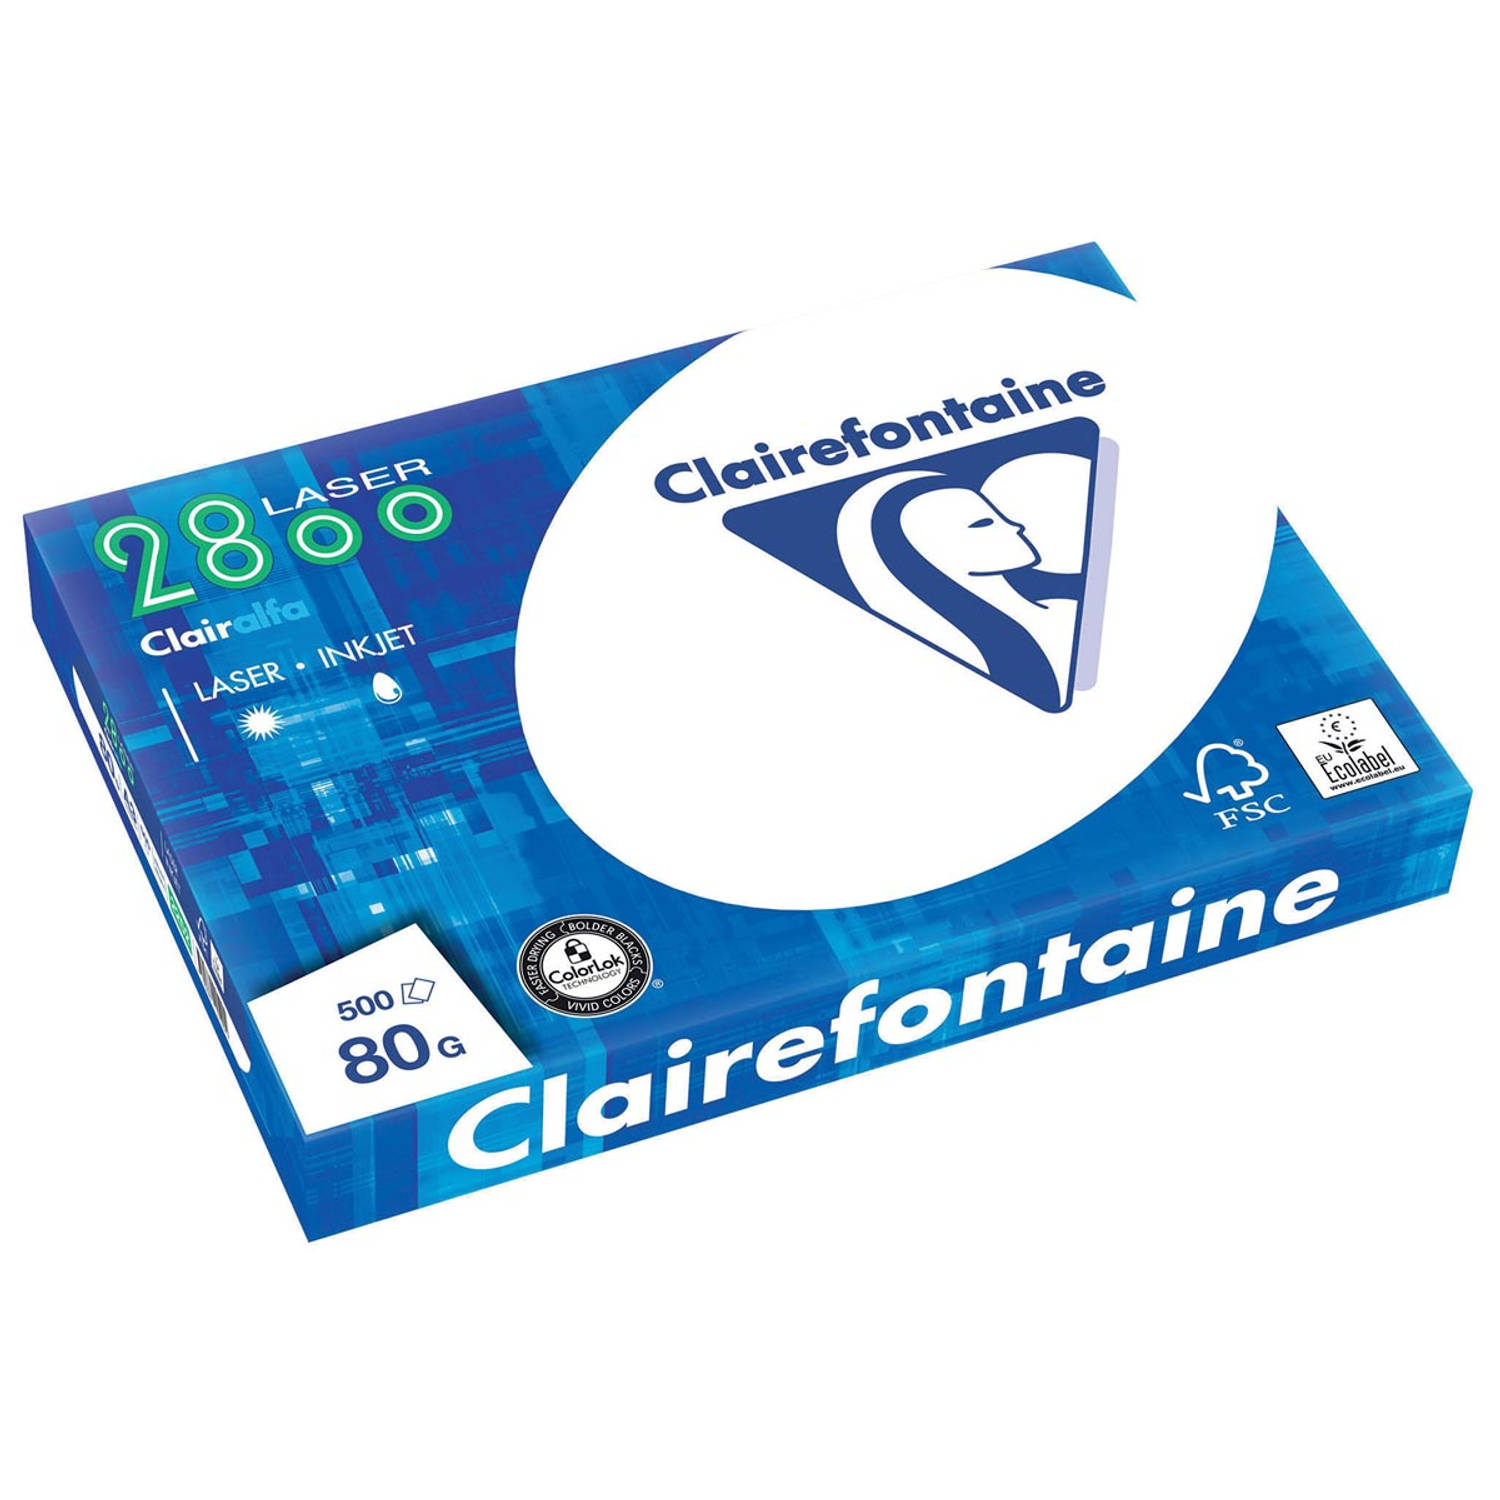 Clairefontaine Clairalfa printpapier ft A3, 80 g, pak van 500 vel 5 stuks